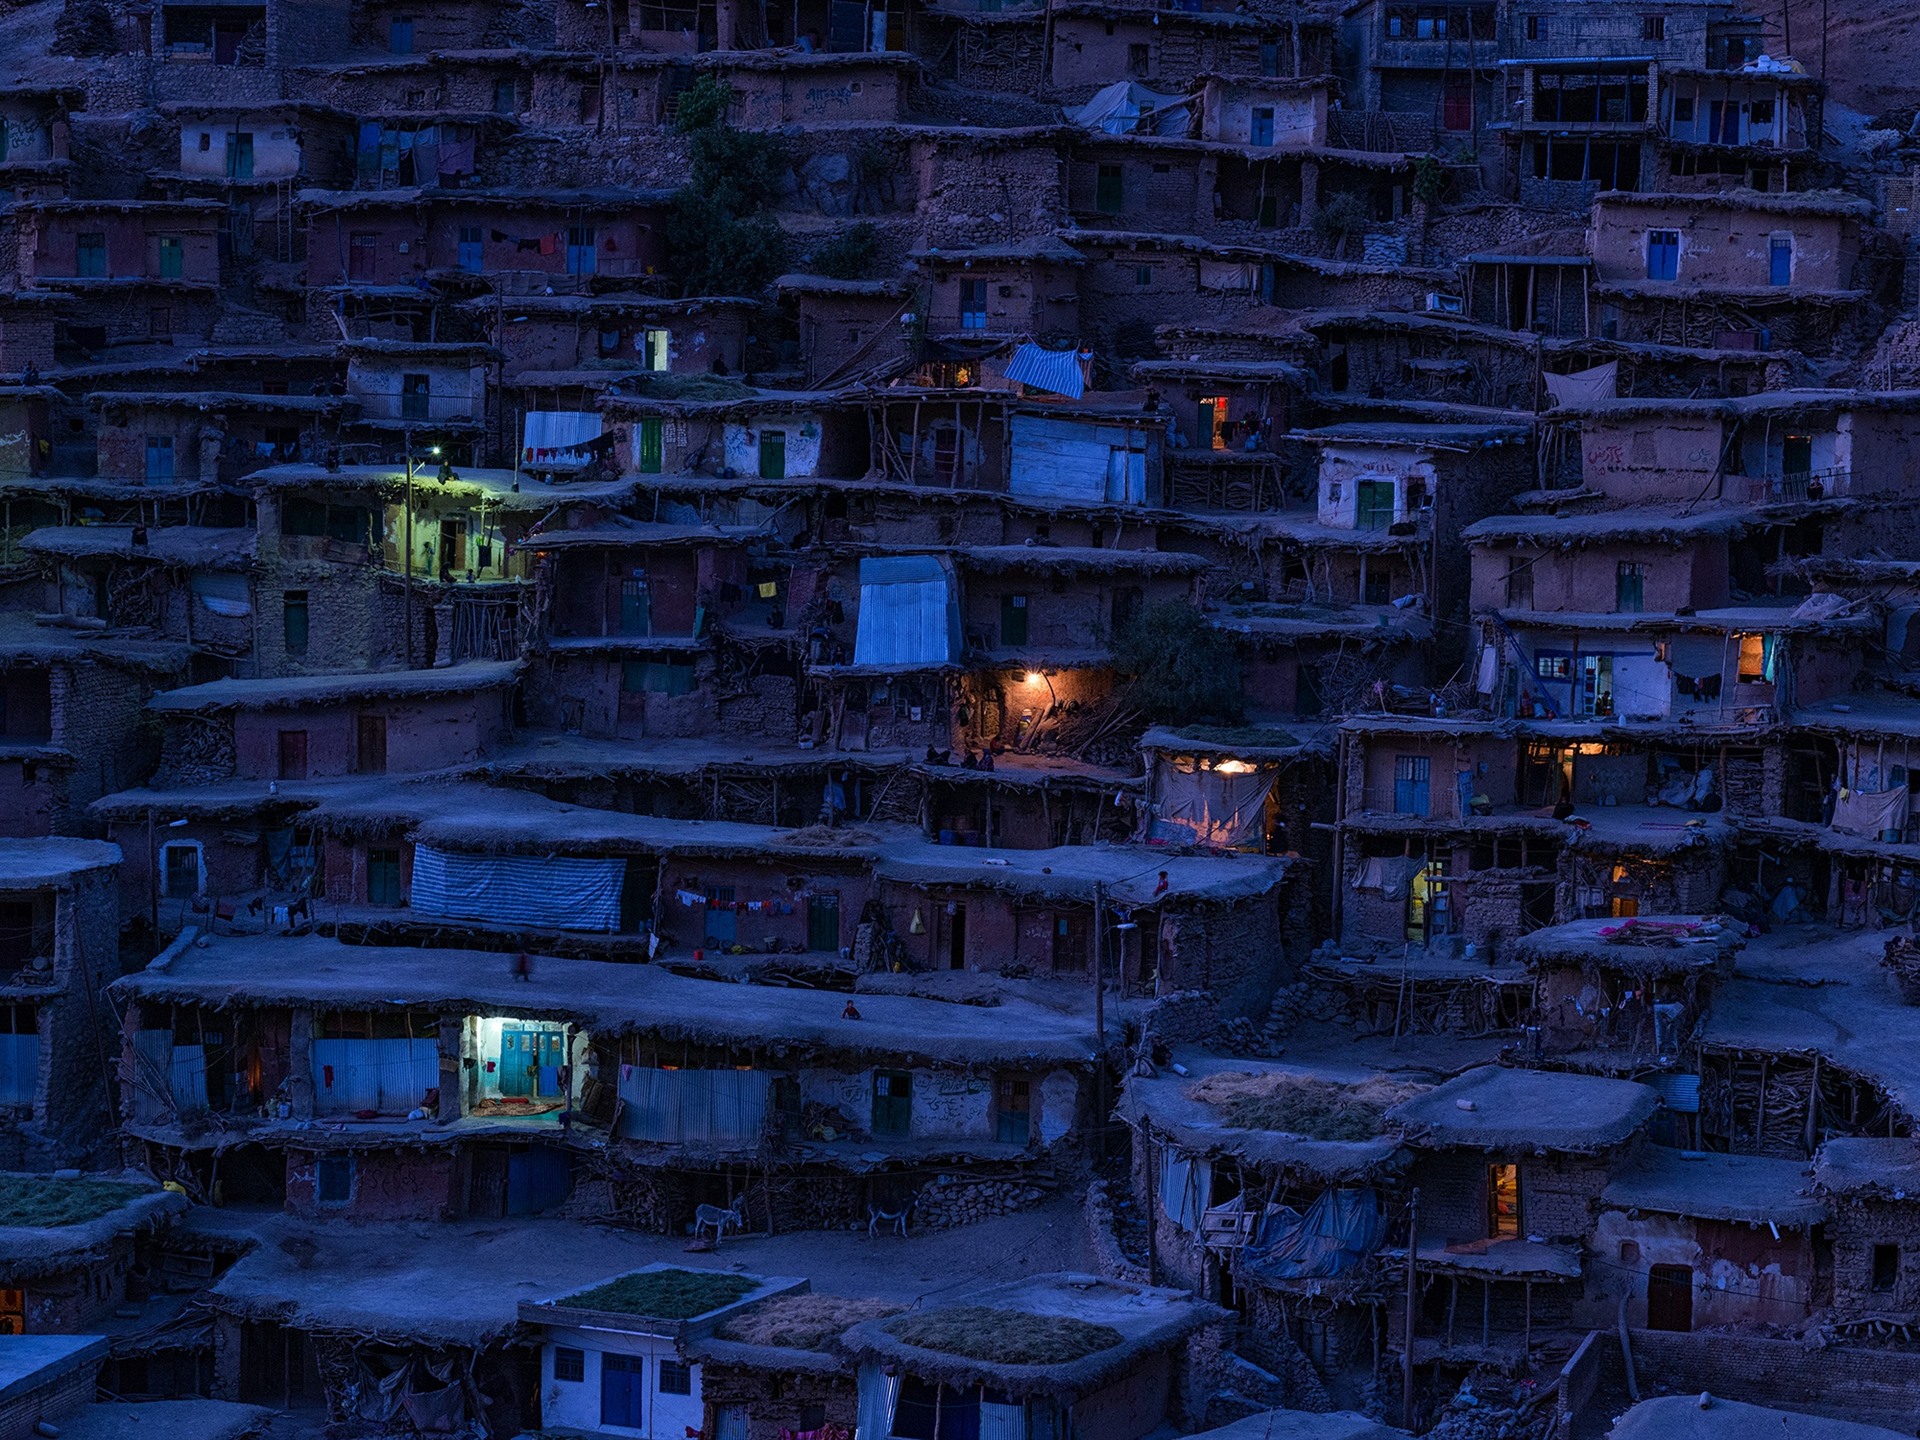 Iran slums village night 750x1334 iPhone 8766S wallpaper 1920x1440